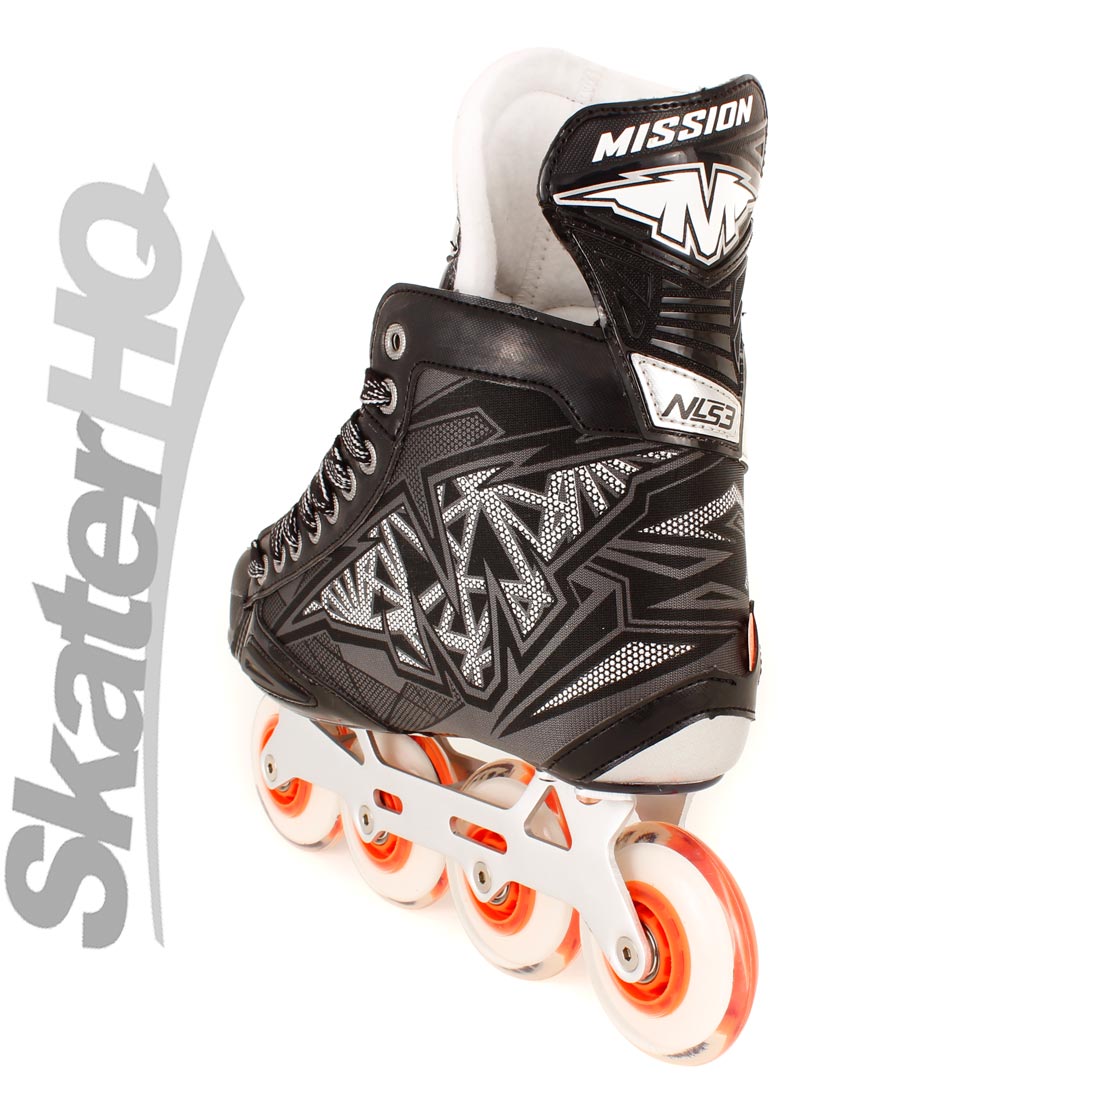 Mission Inhaler NLS3 Skate - 12US Inline Hockey Skates